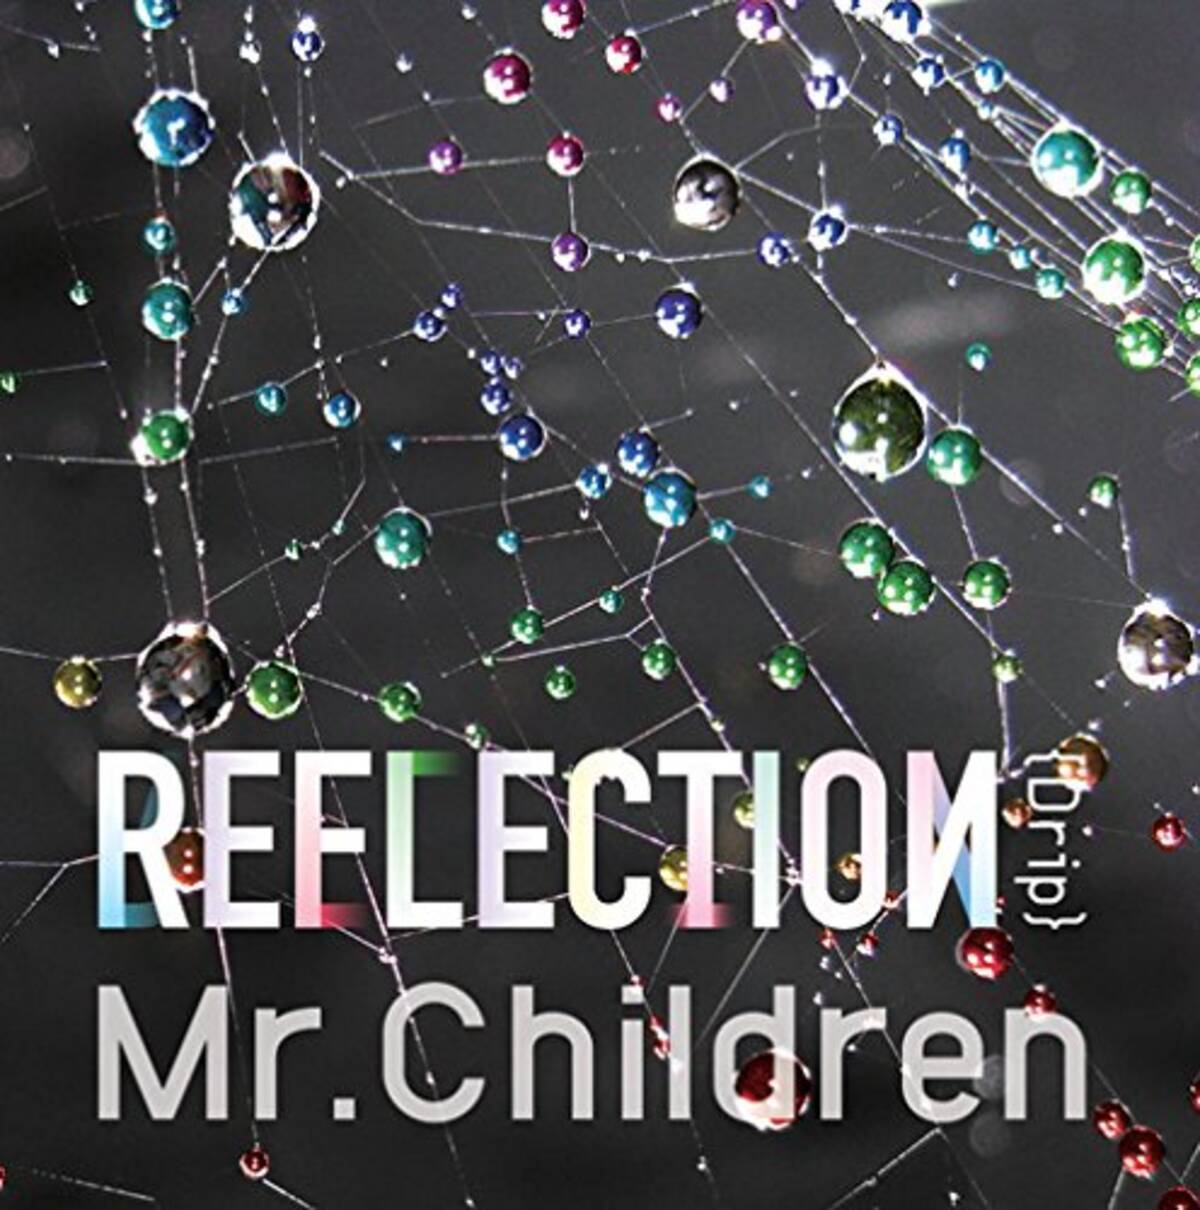 Mr Childrenは映画 Reflection で何を伝えたかったのか エキサイトニュース 4 7